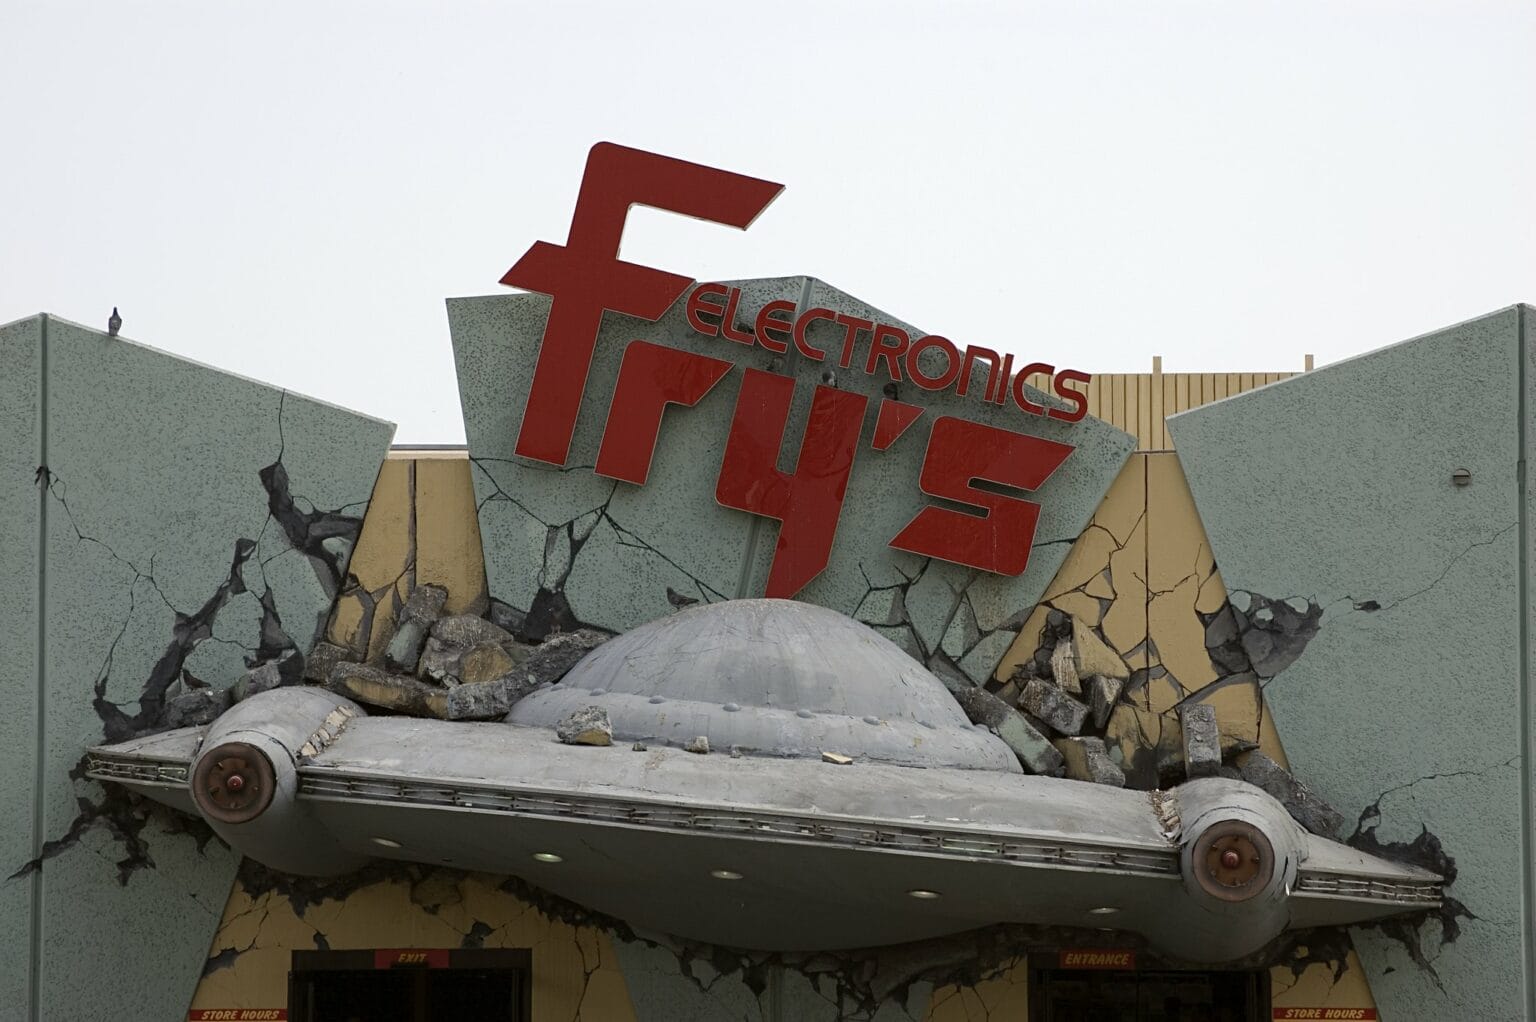 The Fry's Electronics in Burbank, California, had a retro alien invasion theme.